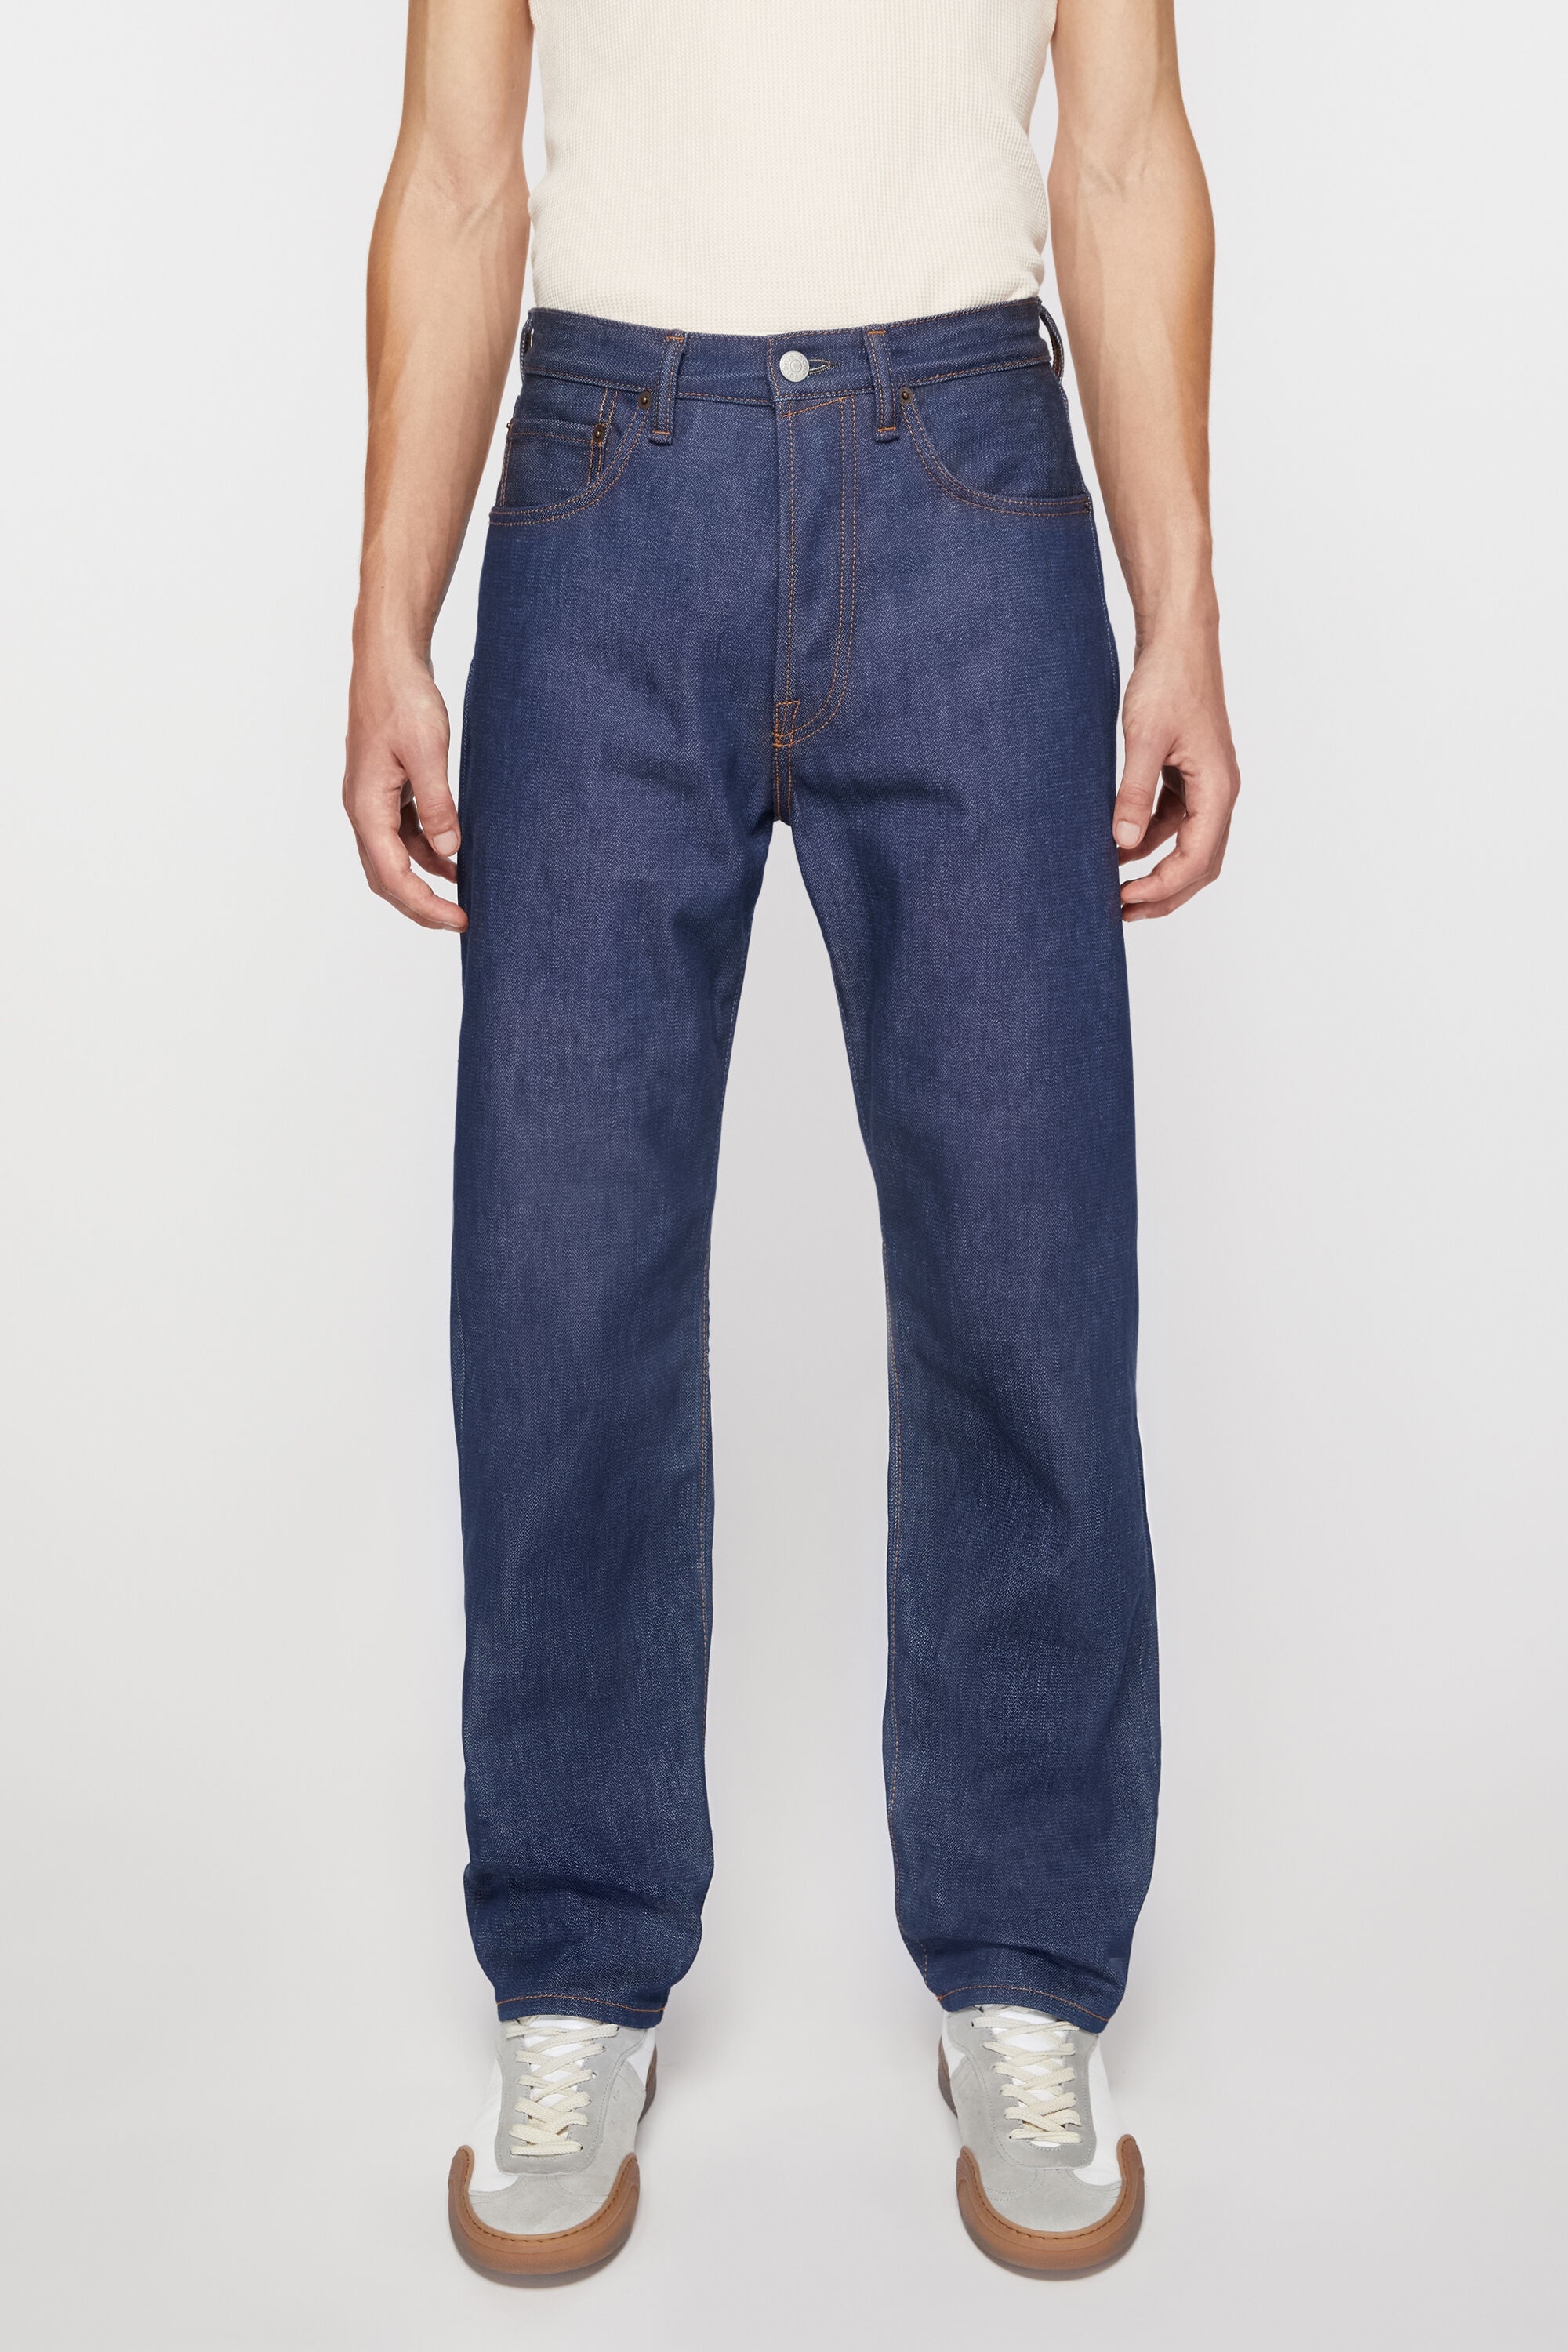 Regular fit jeans -1996 - Indigo blue - 2